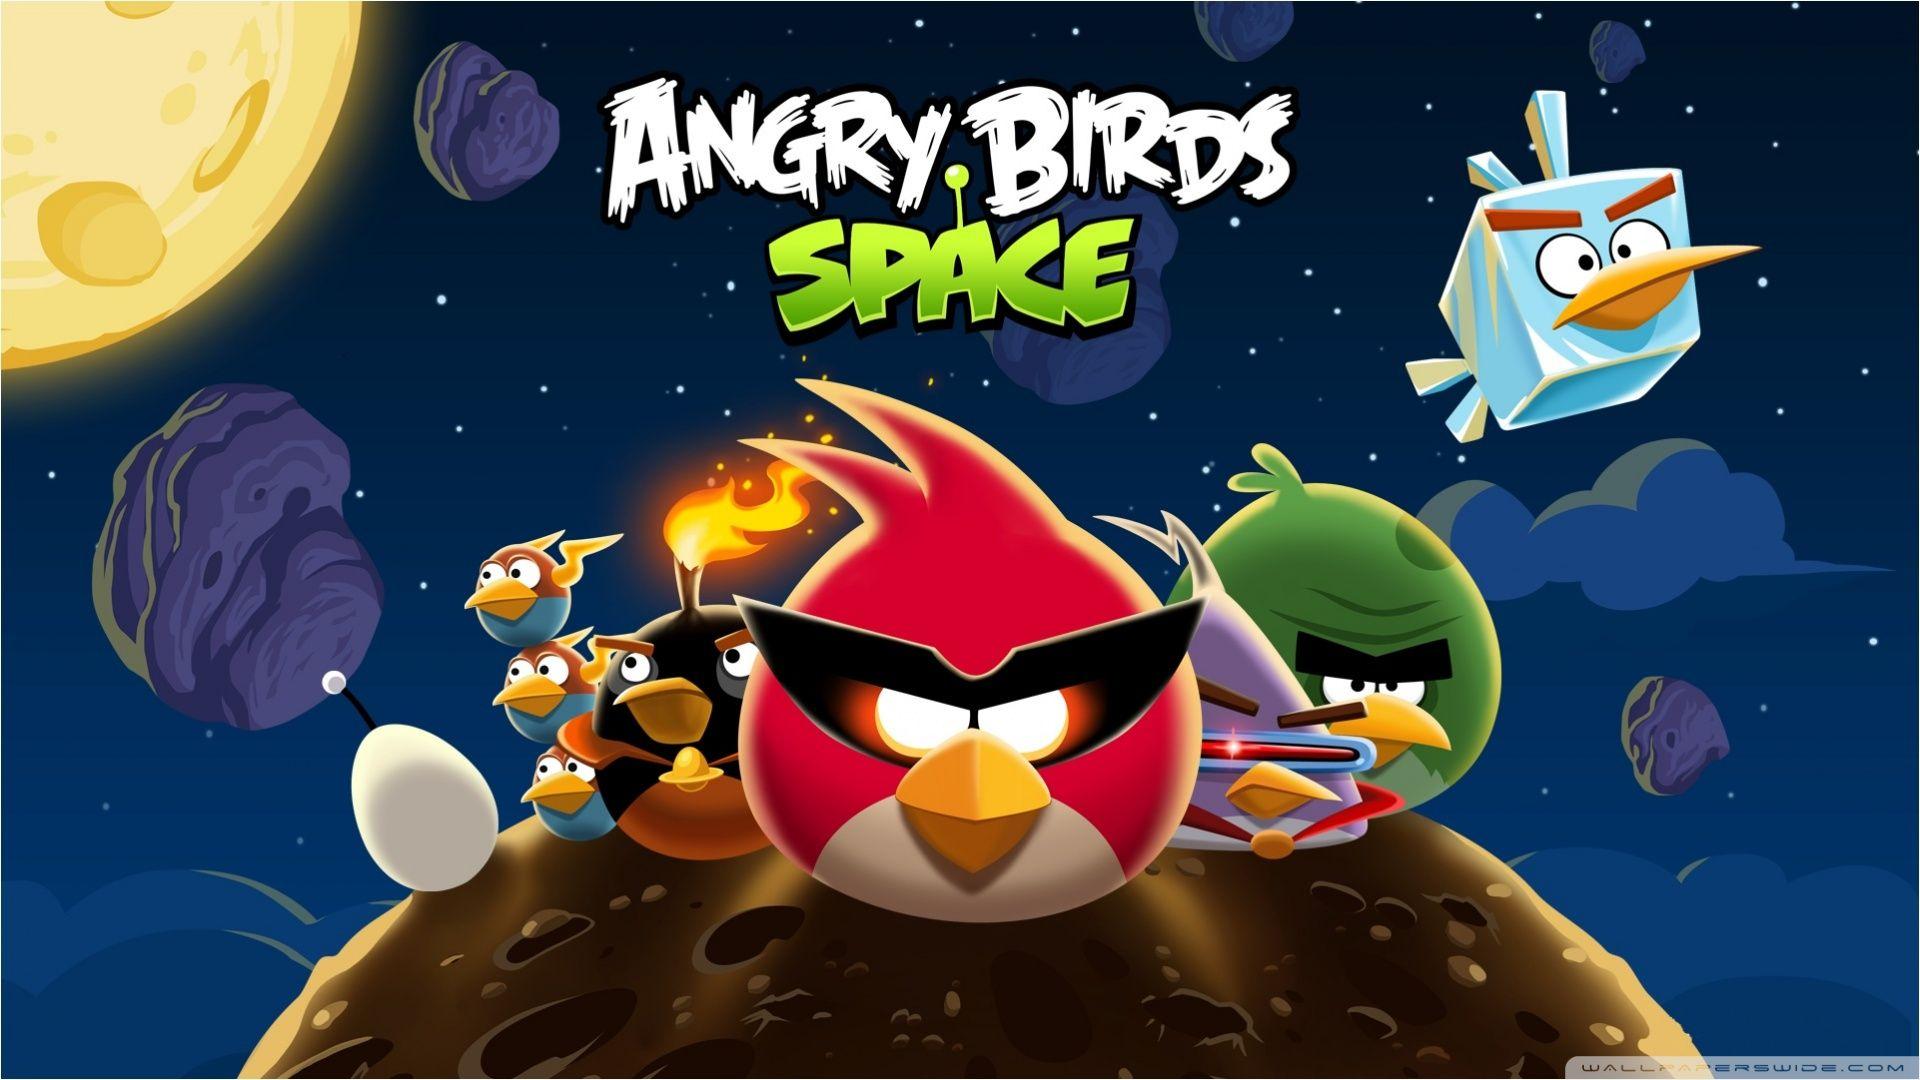 Angry Birds Space HD desktop wallpaper, High Definition